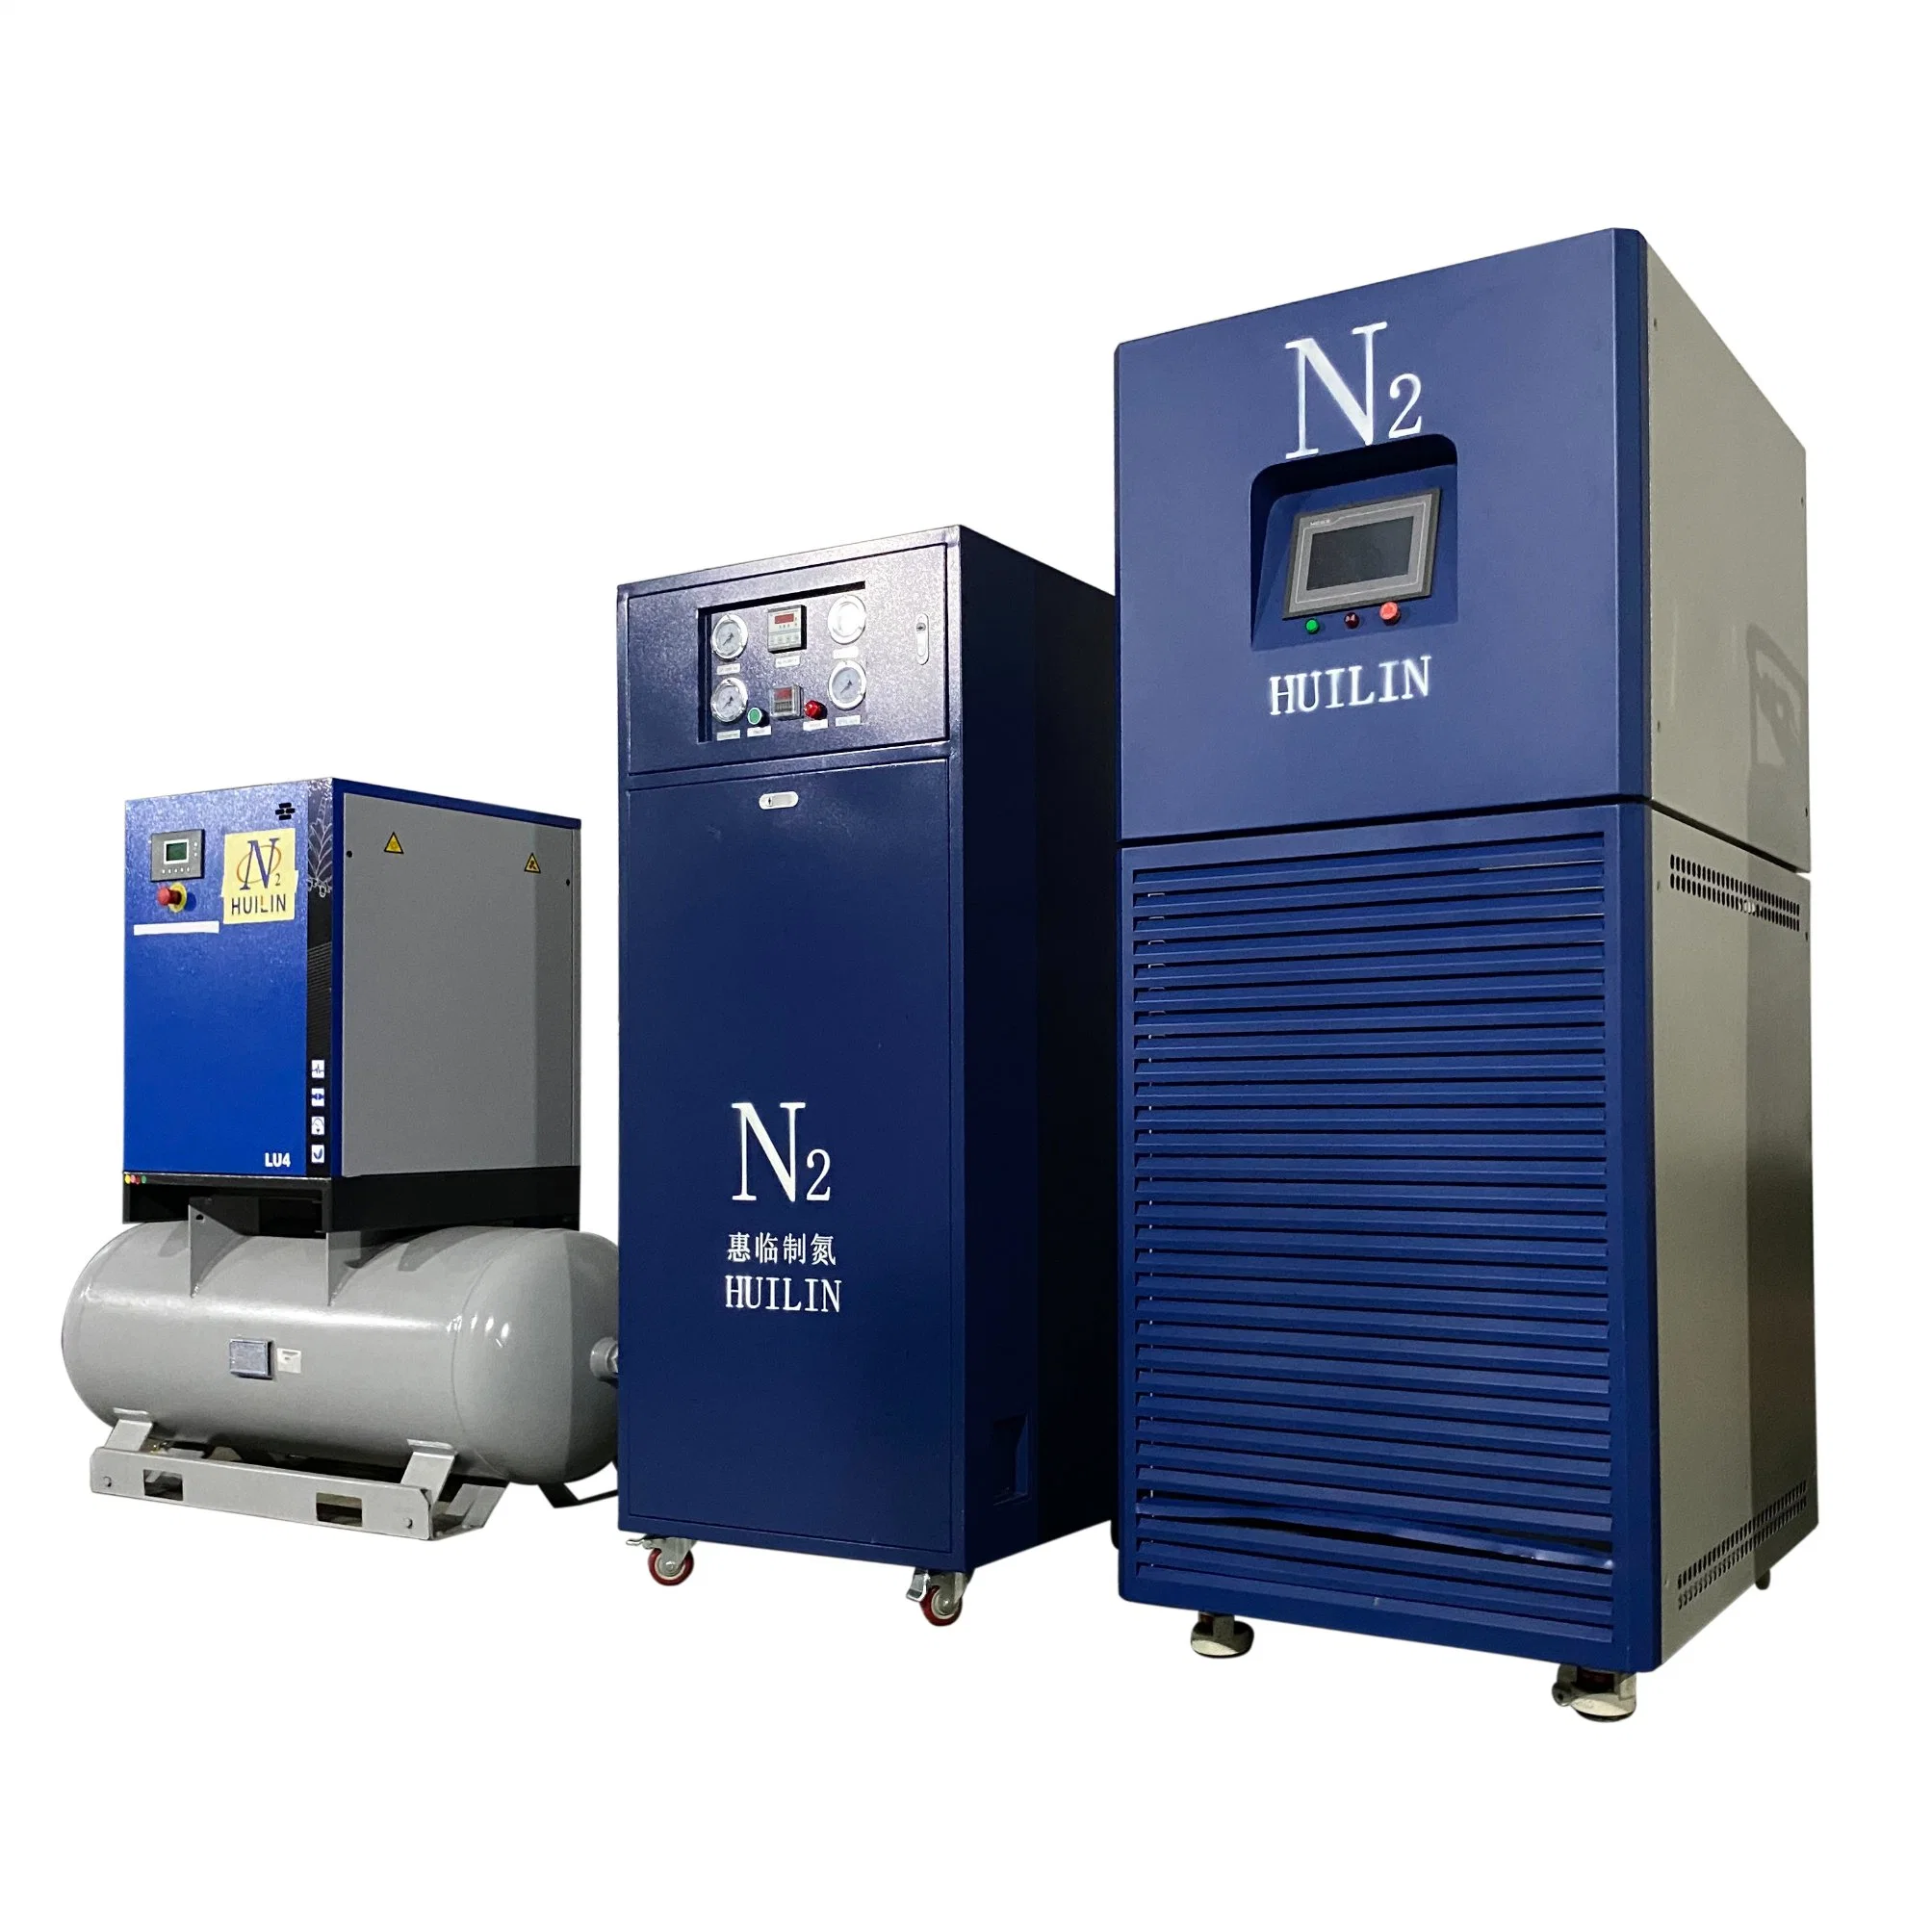 Fully Automatic Liquid Nitrogen Machine for Laboratory